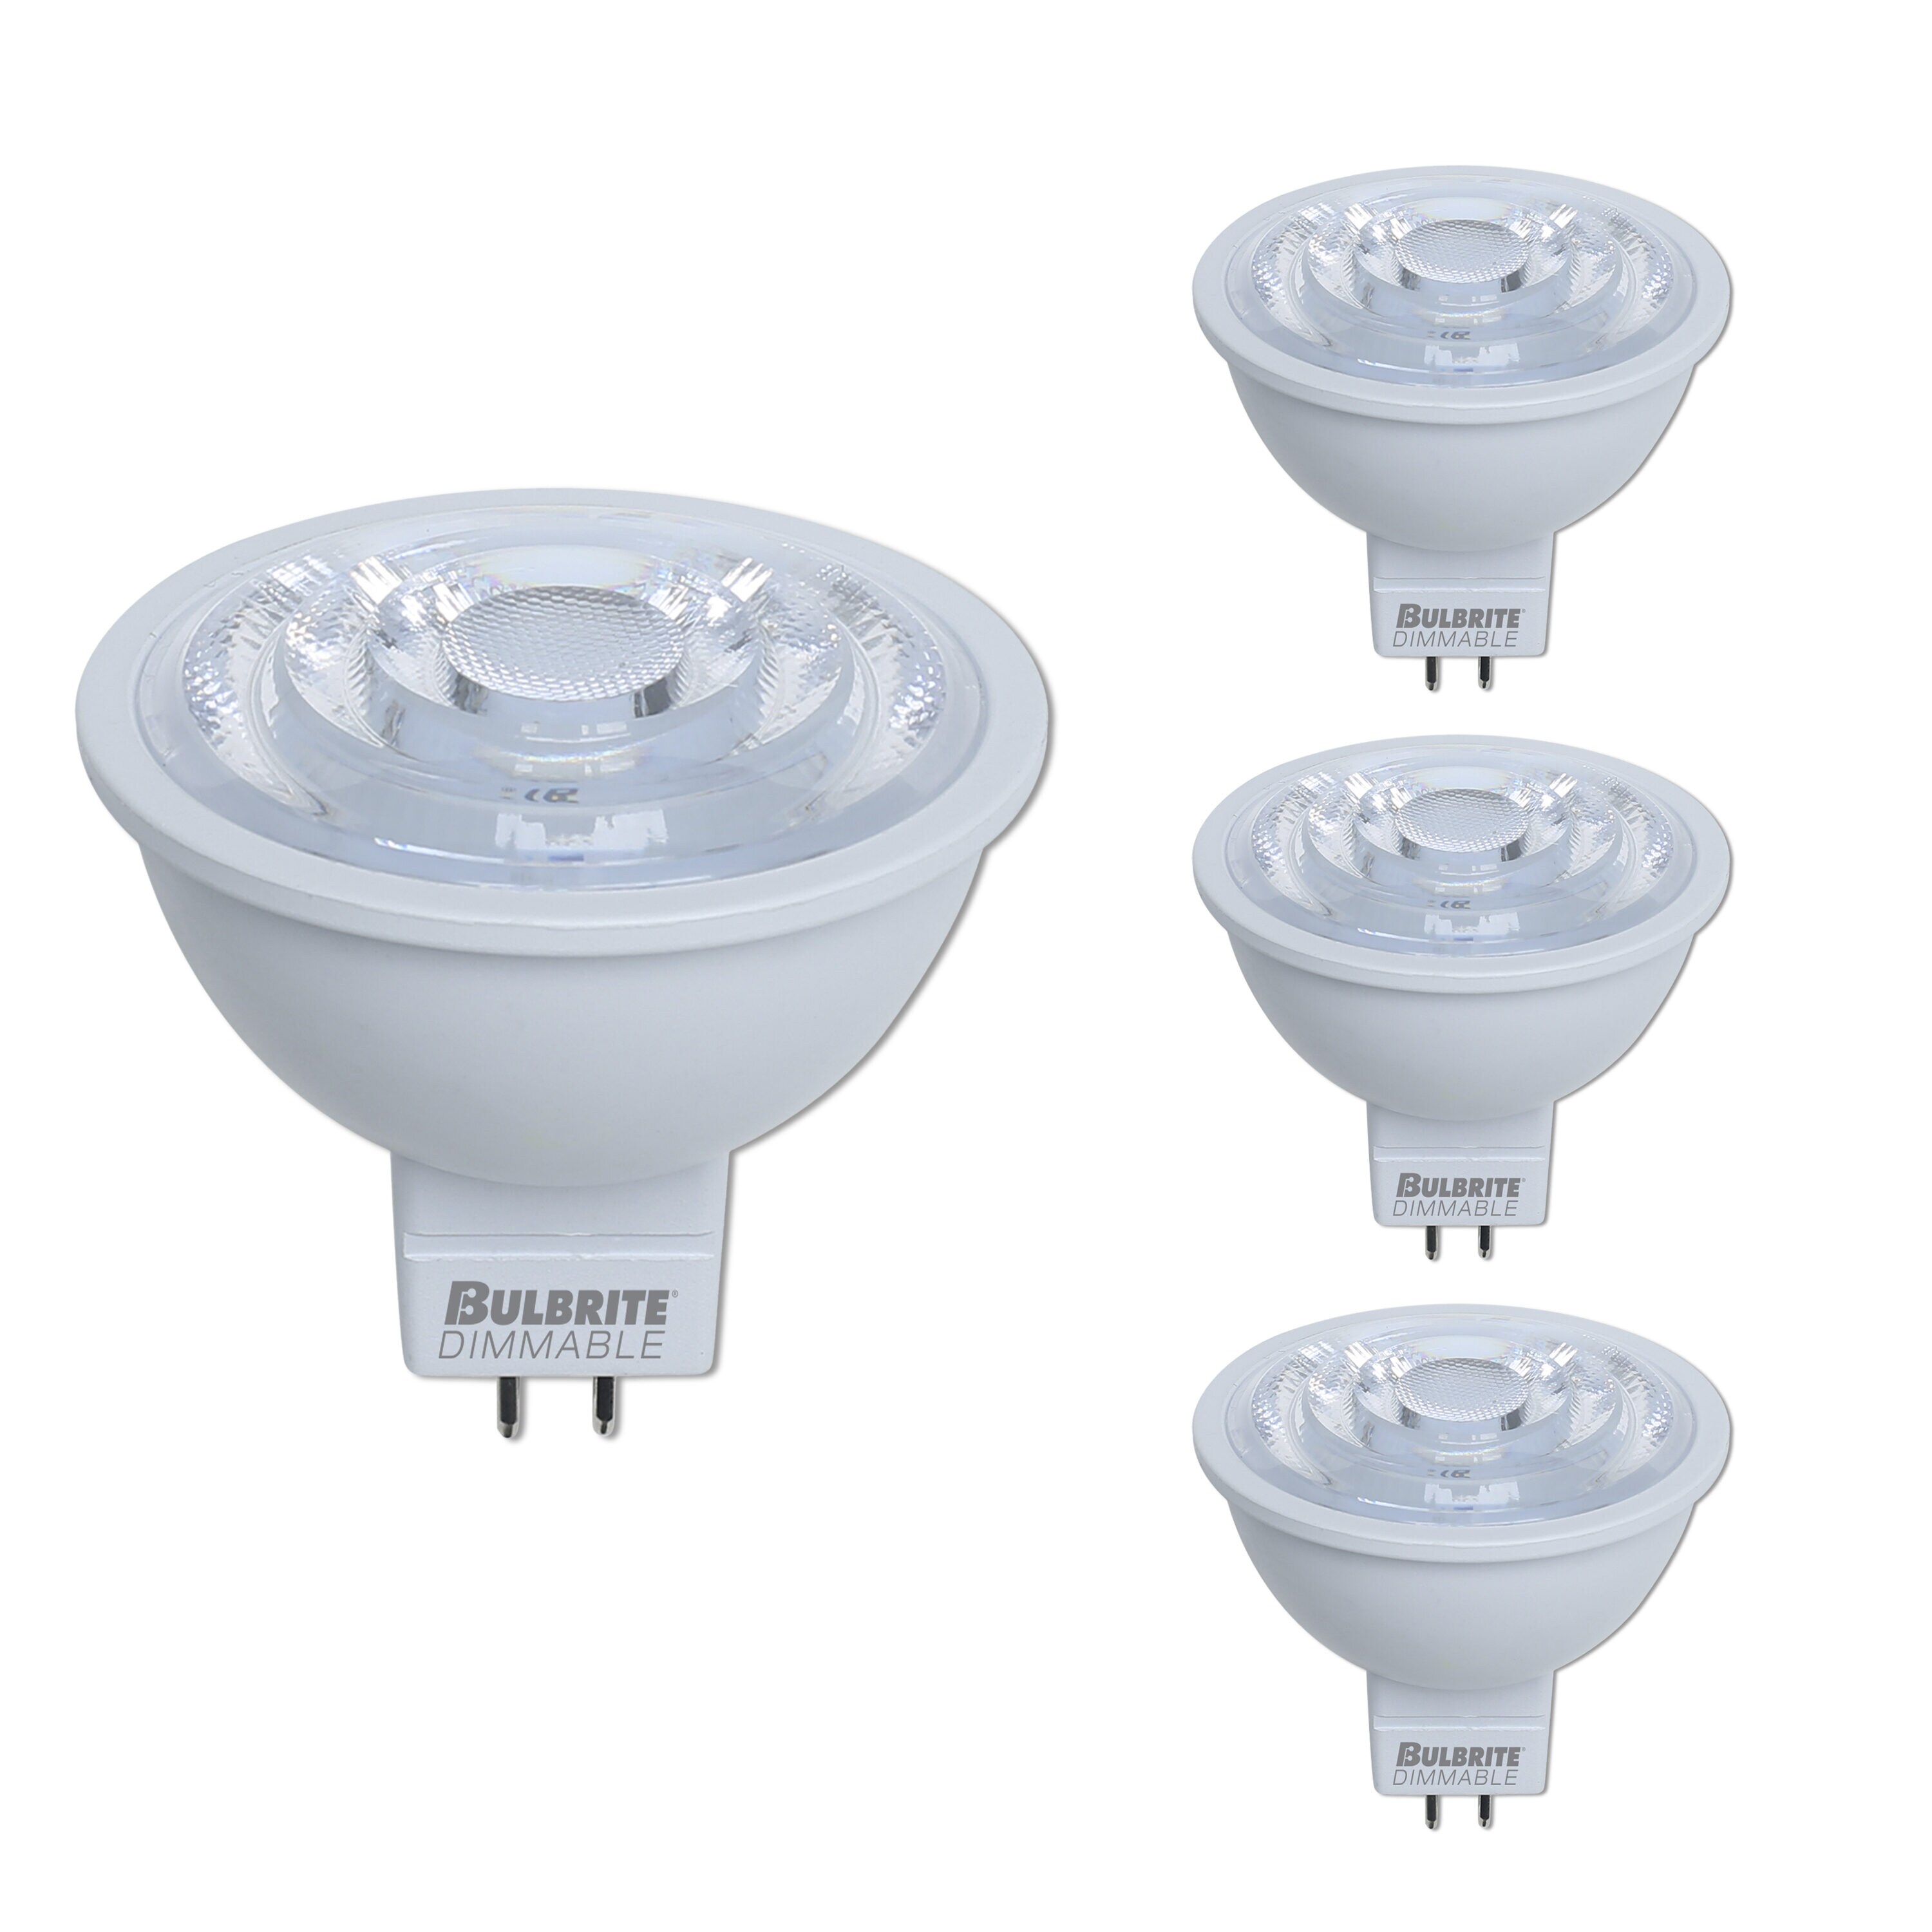 Luxrite MR16 LED Dimmable Spot Light Bulb 6.5W (50W Equivalent) 4000K Cool  White, 500 Lumens, GU5.3, 16 Pack